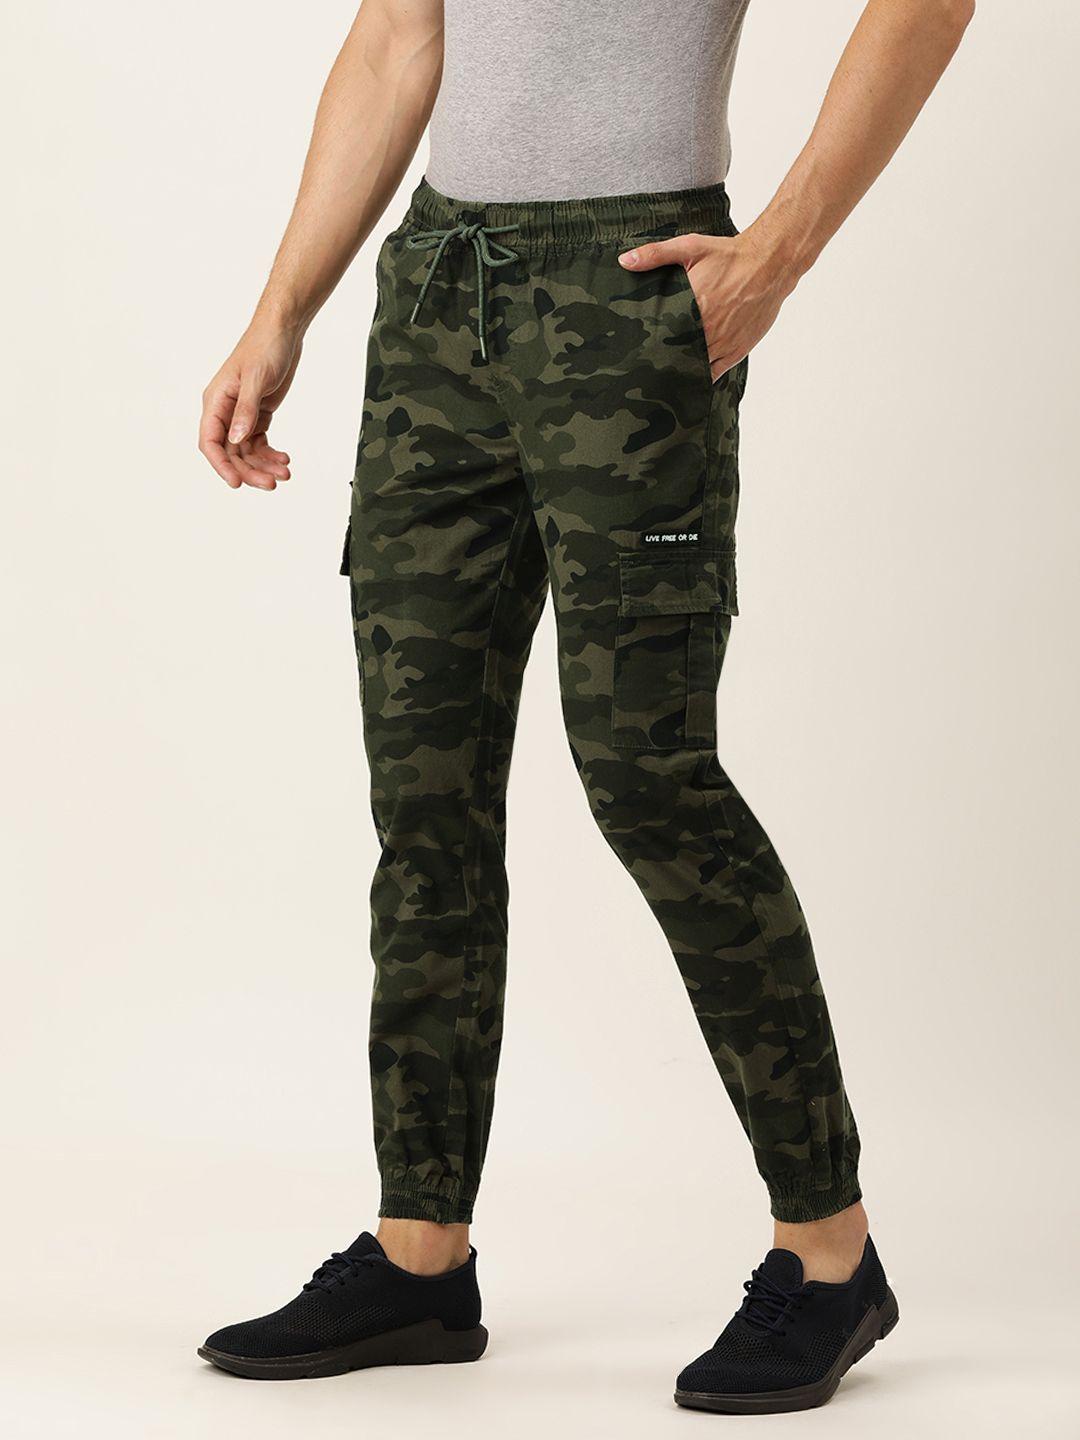 ivoc men olive green camouflage print cotton slim fit comfort cargo joggers